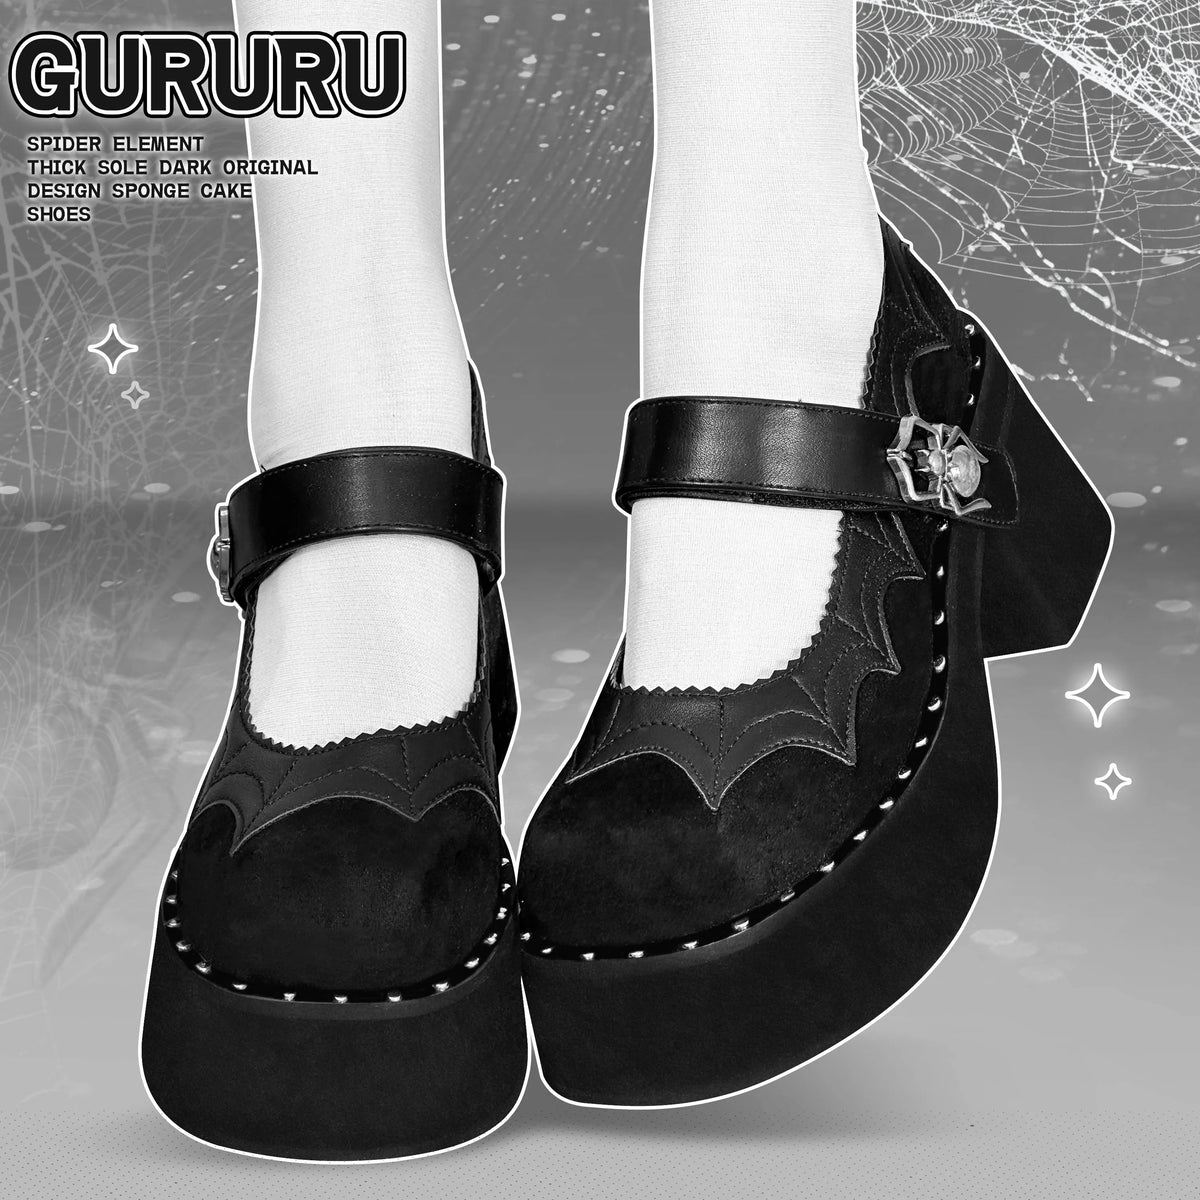 Gururu Original Spider Theme Gothic Lolita Shoes - Dark Thick Sole PU High Heels for Sweet Tea Party